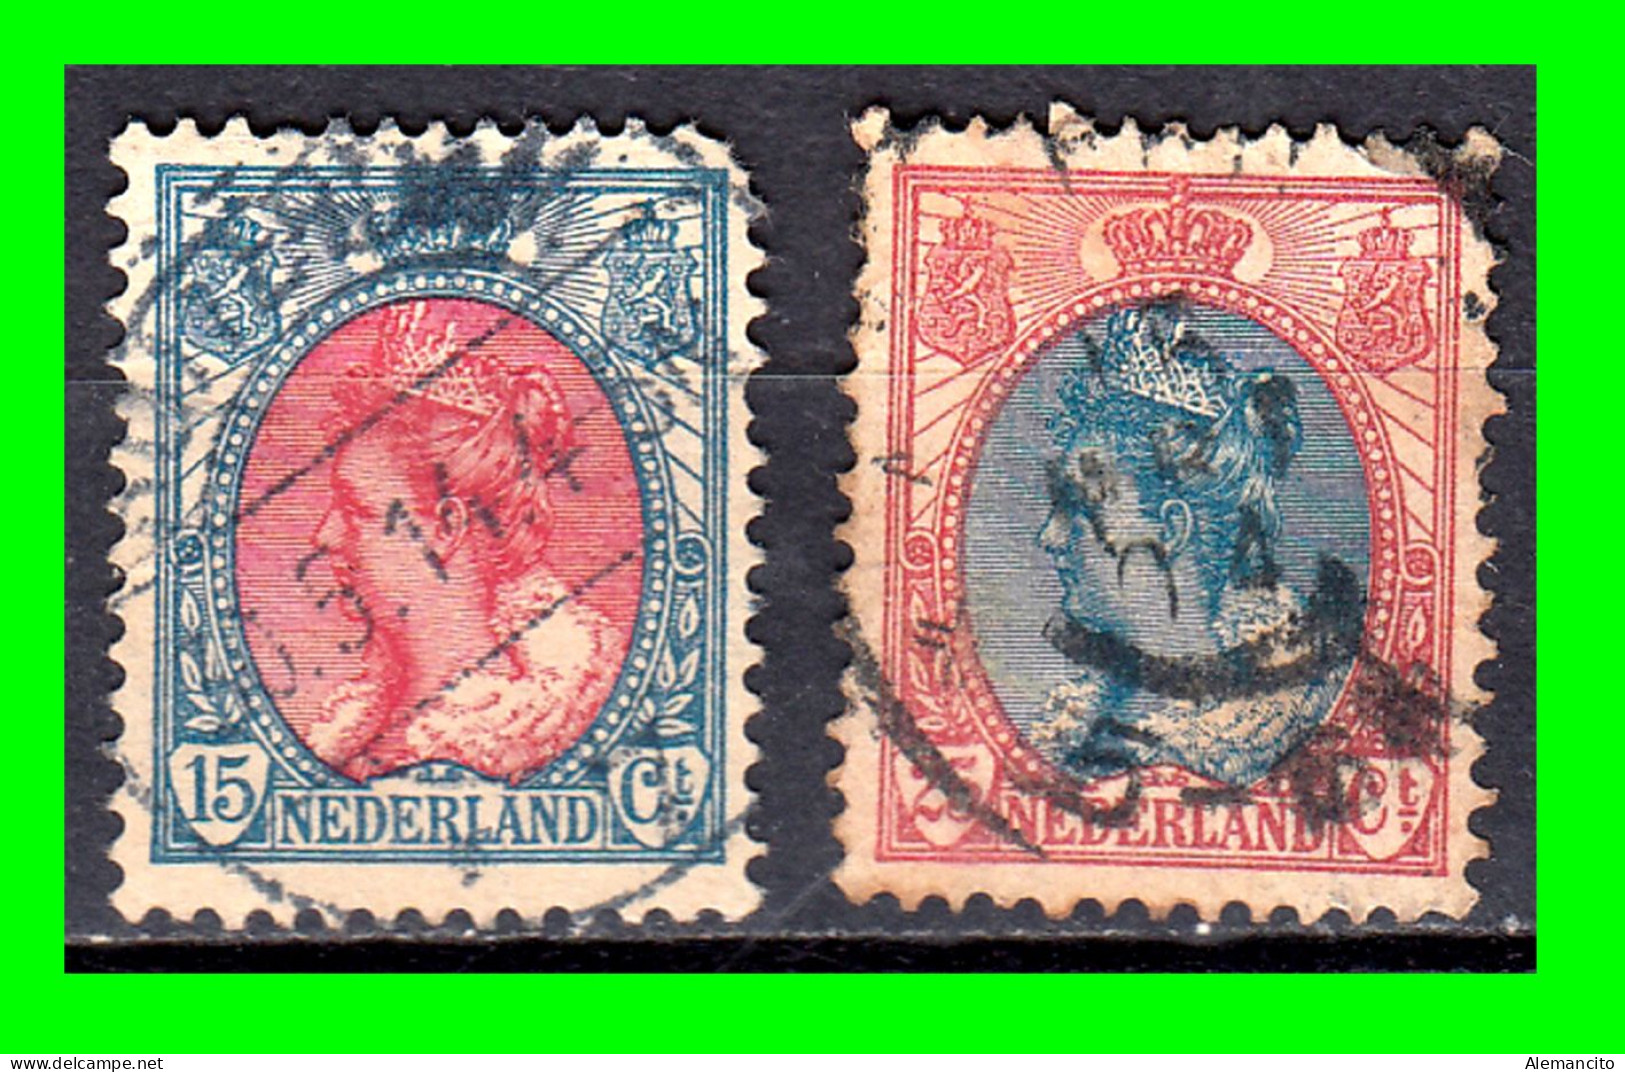 PAISES BAJOS ( EUROPA )  SELLO AÑO 1899 REINA GUILLERMINA - Used Stamps